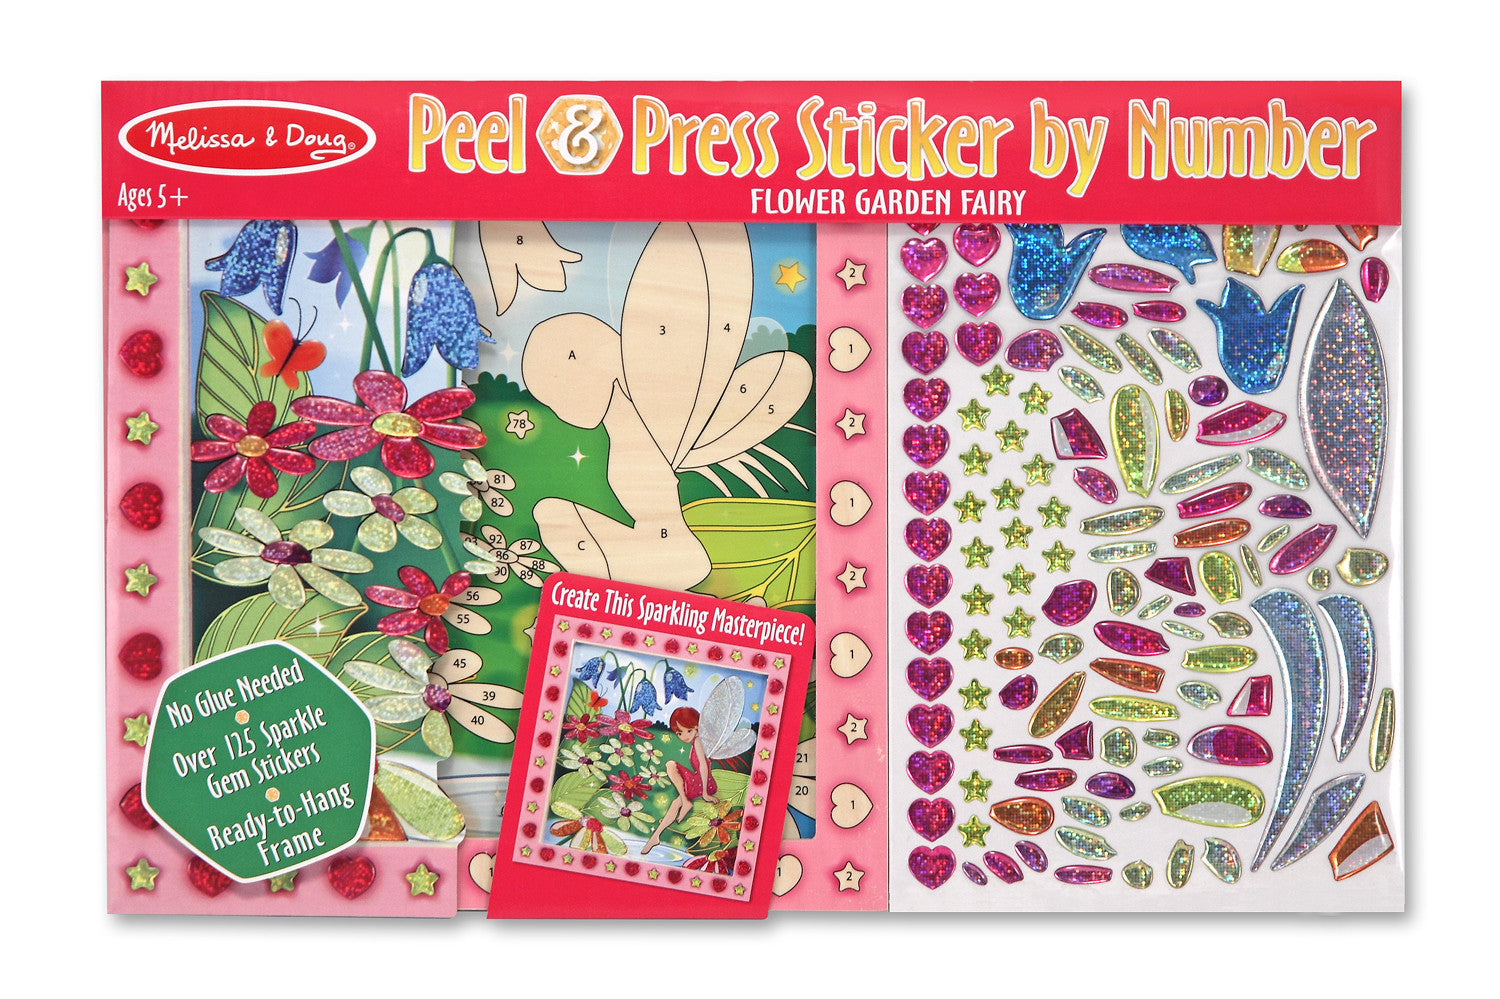 Melissa & Doug Peel & Press Sticker by Number - Flower Garden Fairy 4299